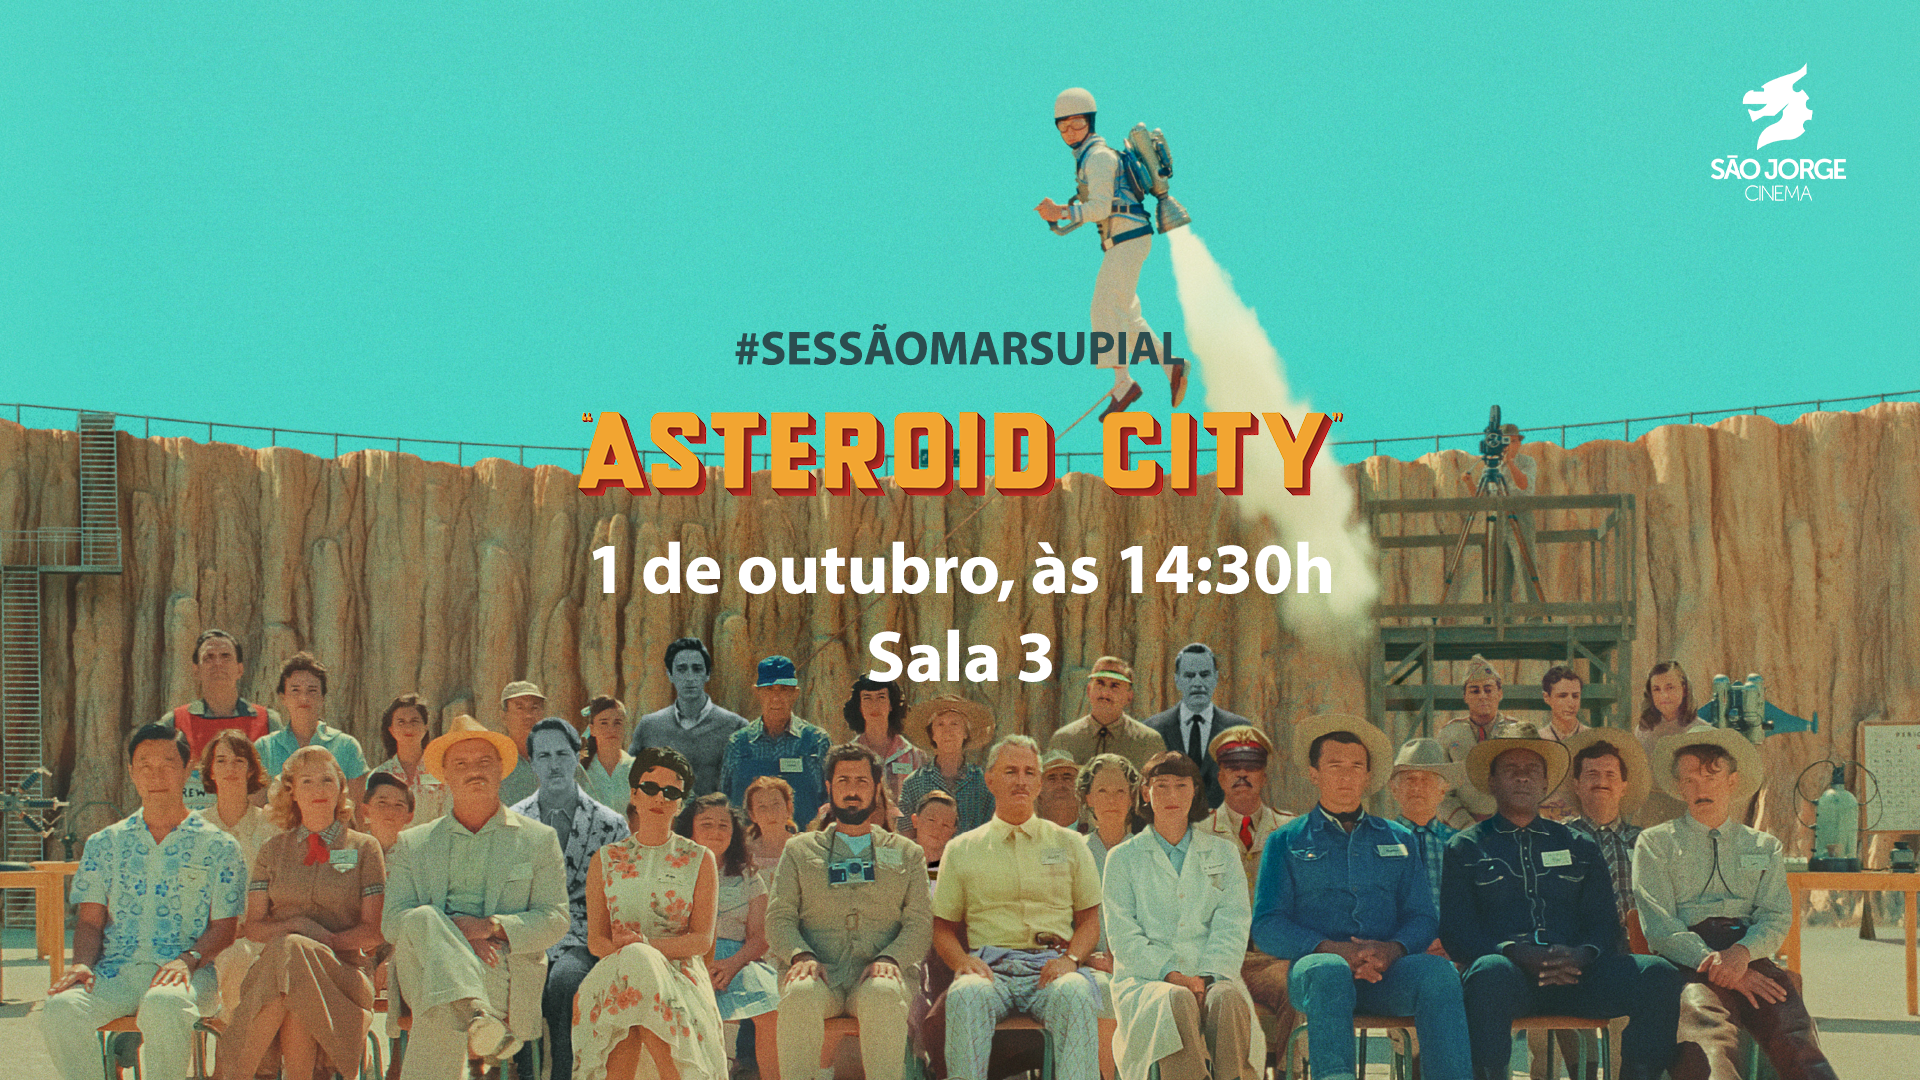 Asteroid City | SESSÃO MARSUPIAL